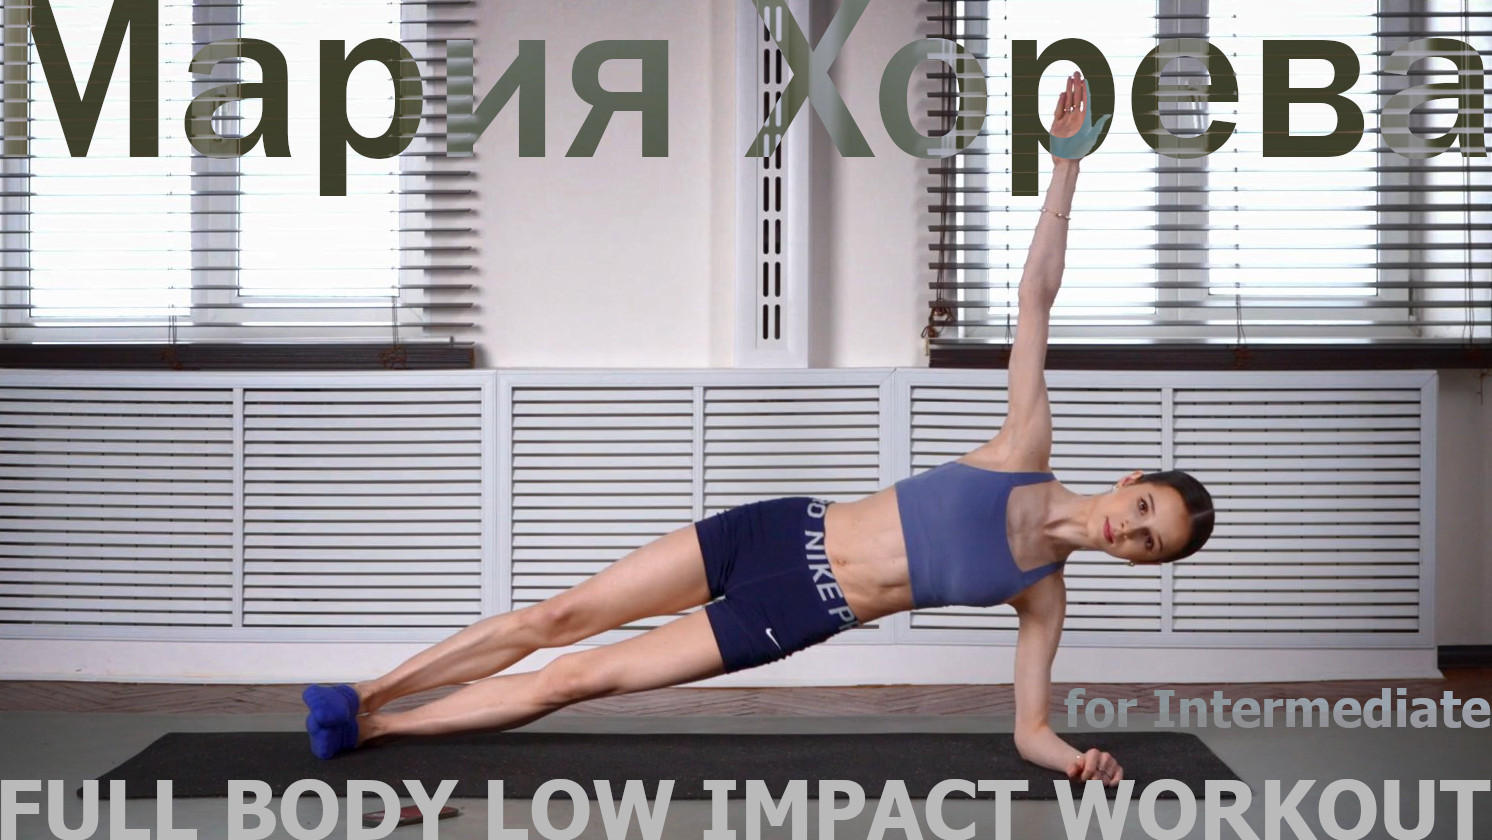 Maria Khoreva - Full Body Low Impact Workout for Intermediate